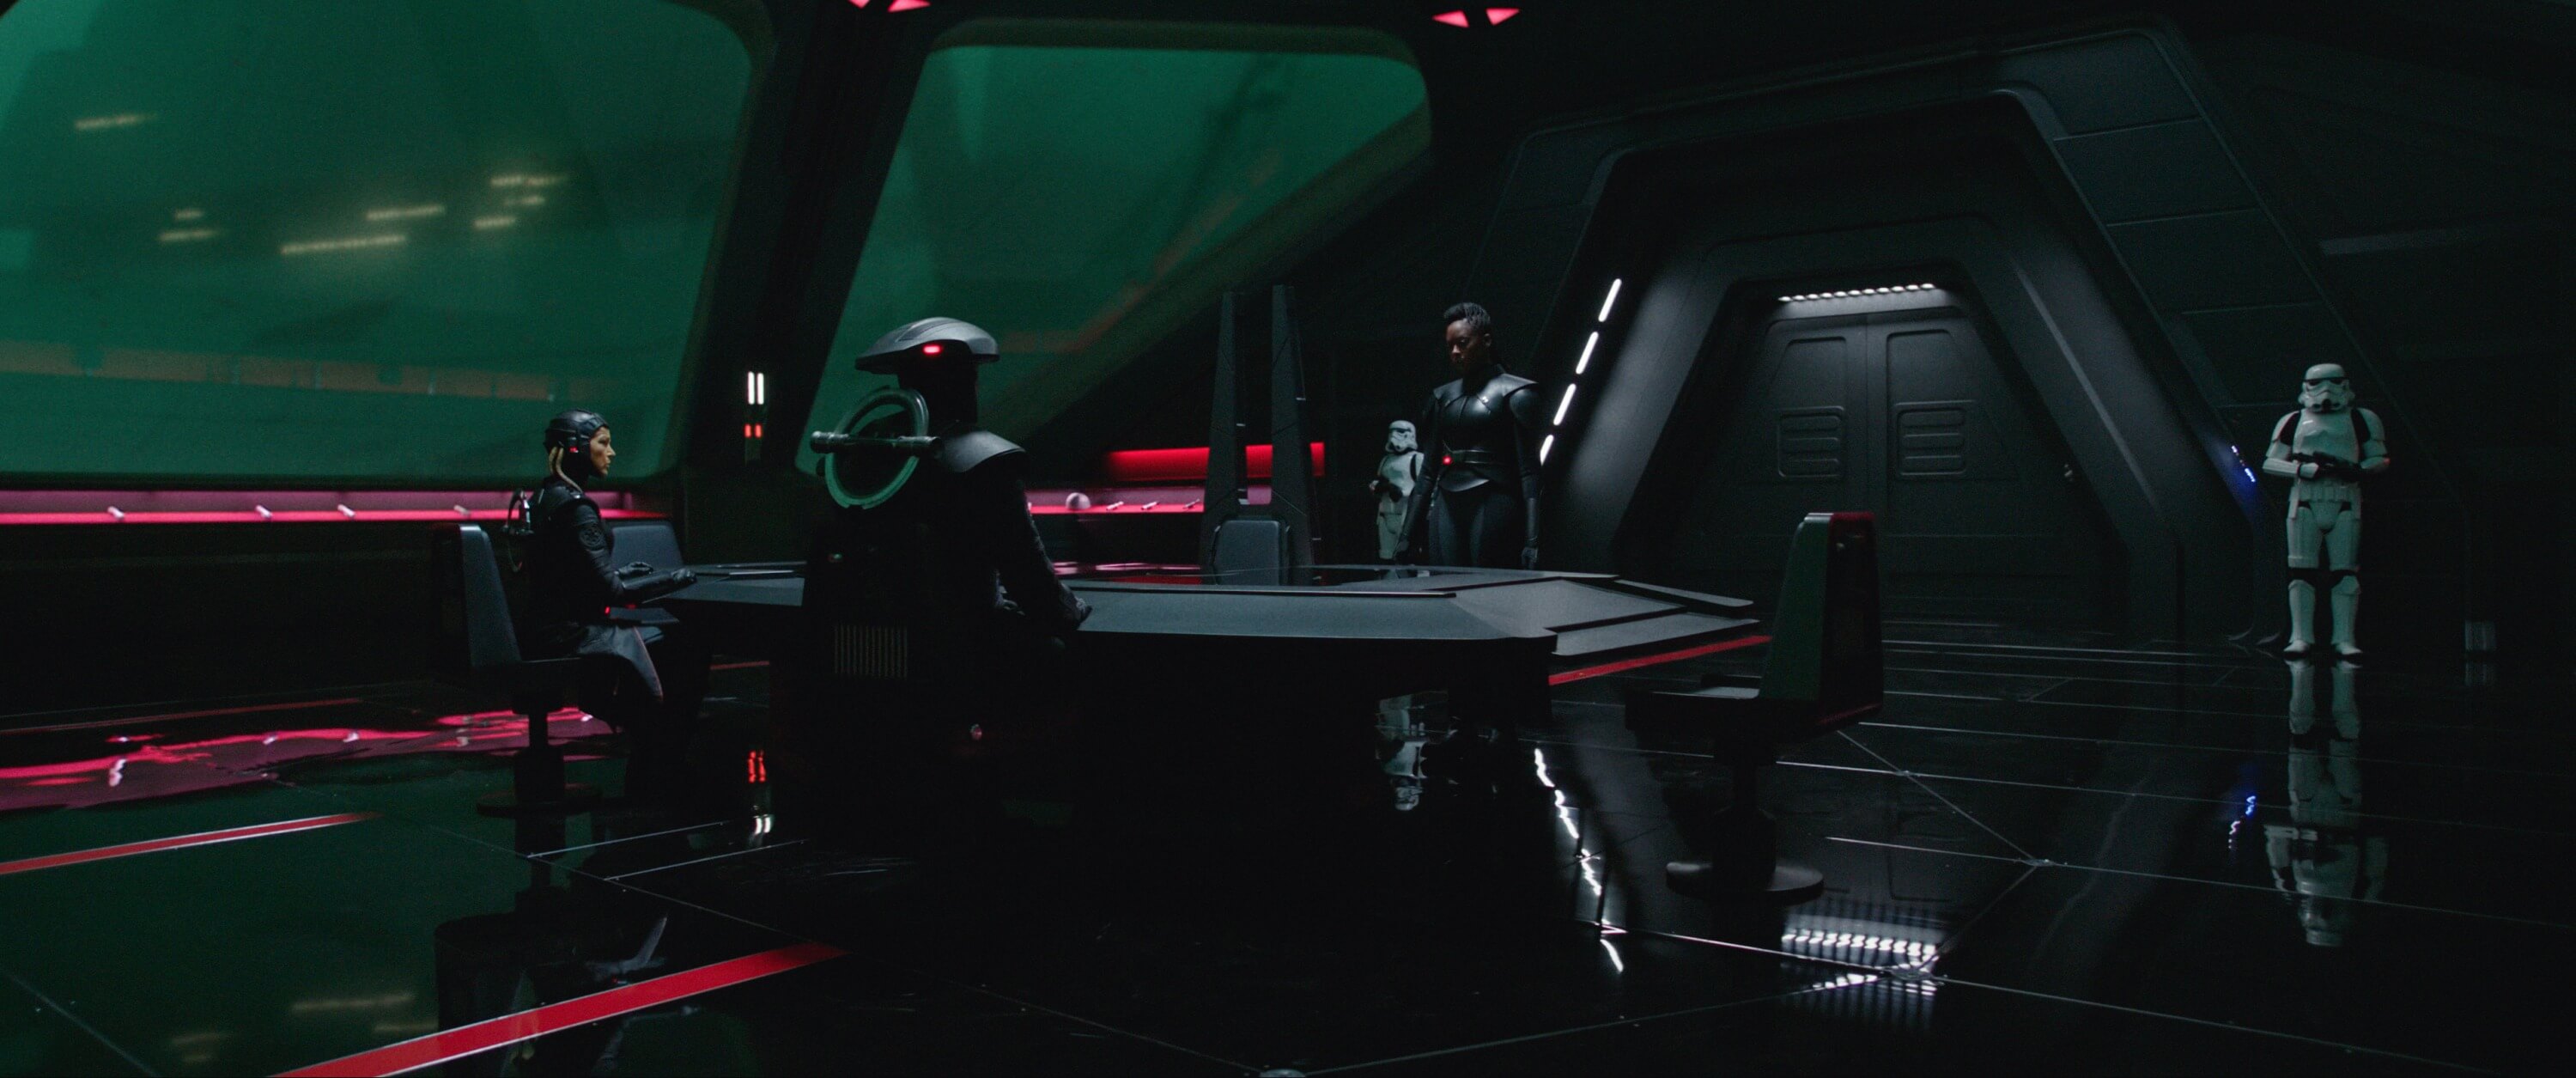 Moses Ingram as an agent of the Empire in Star Wars series Obi-Wan Kenobi